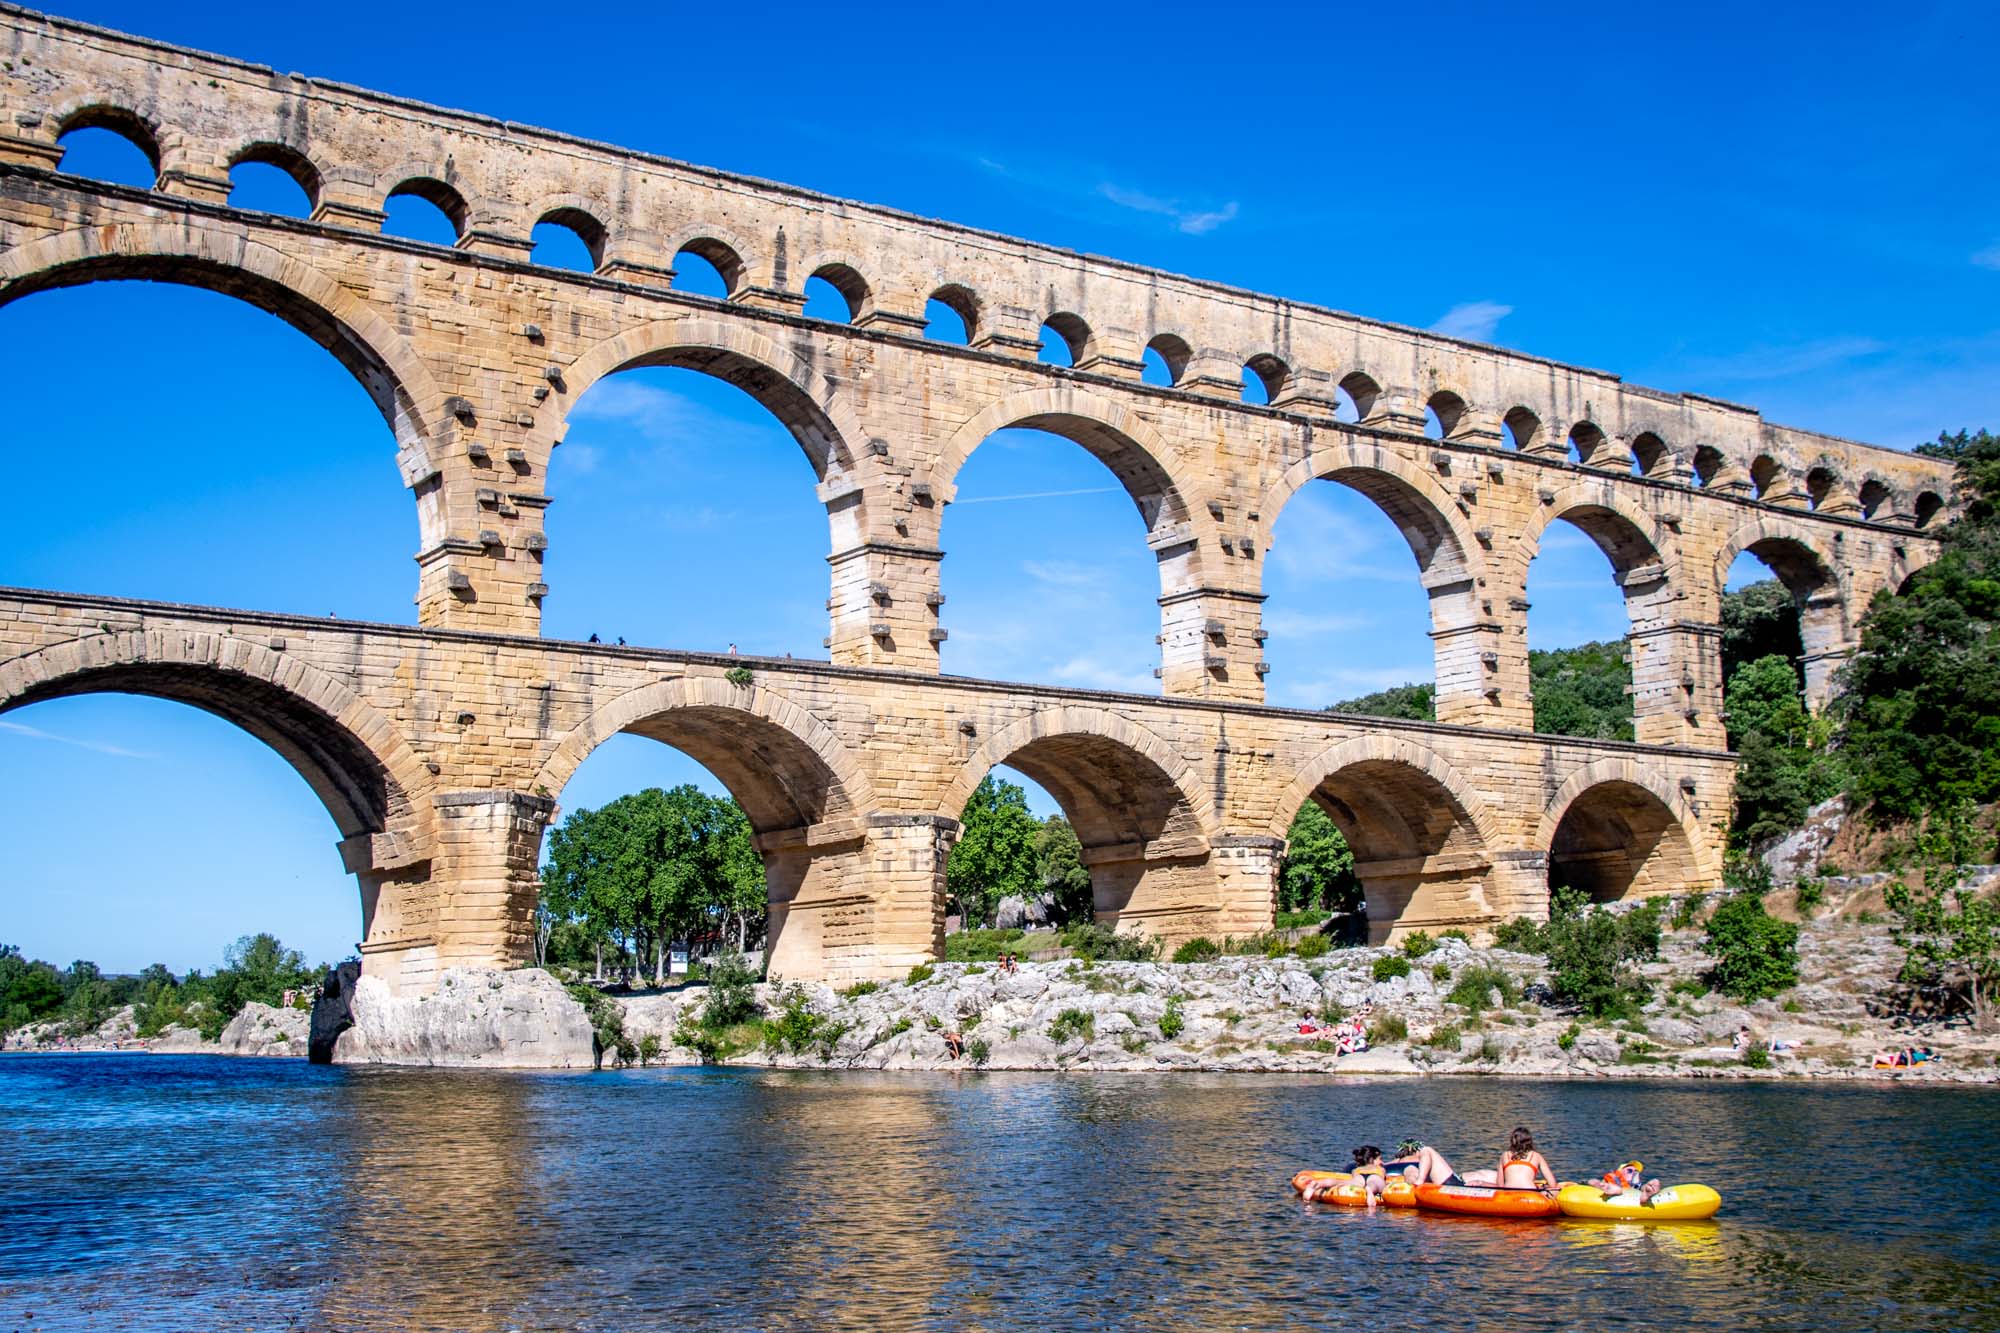 People tubing under the Pont du Gard